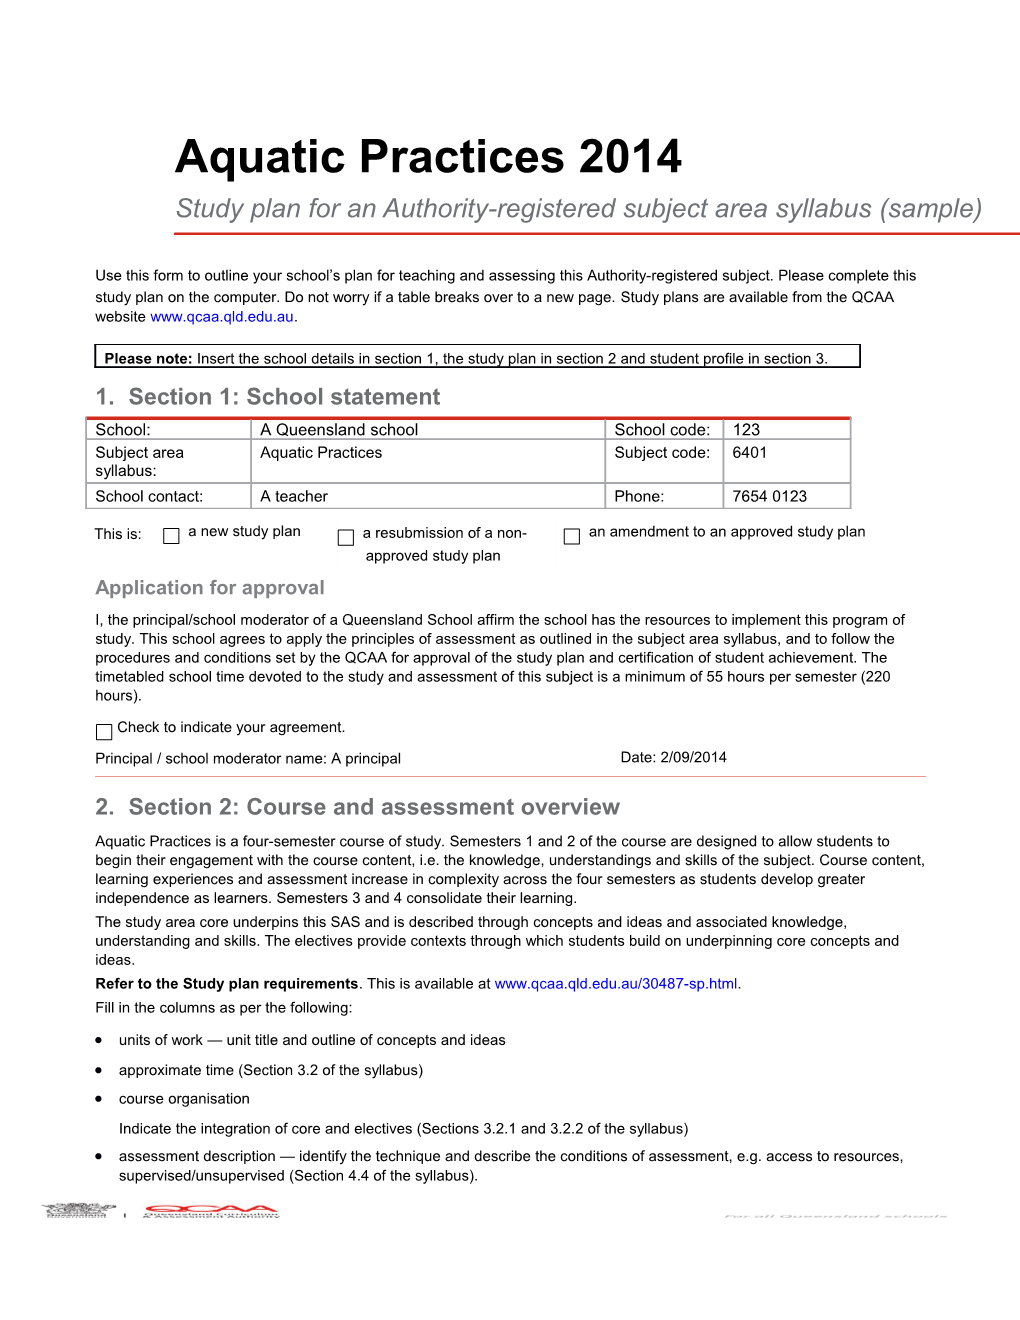 Aquatic Practices 2014 Study Plan